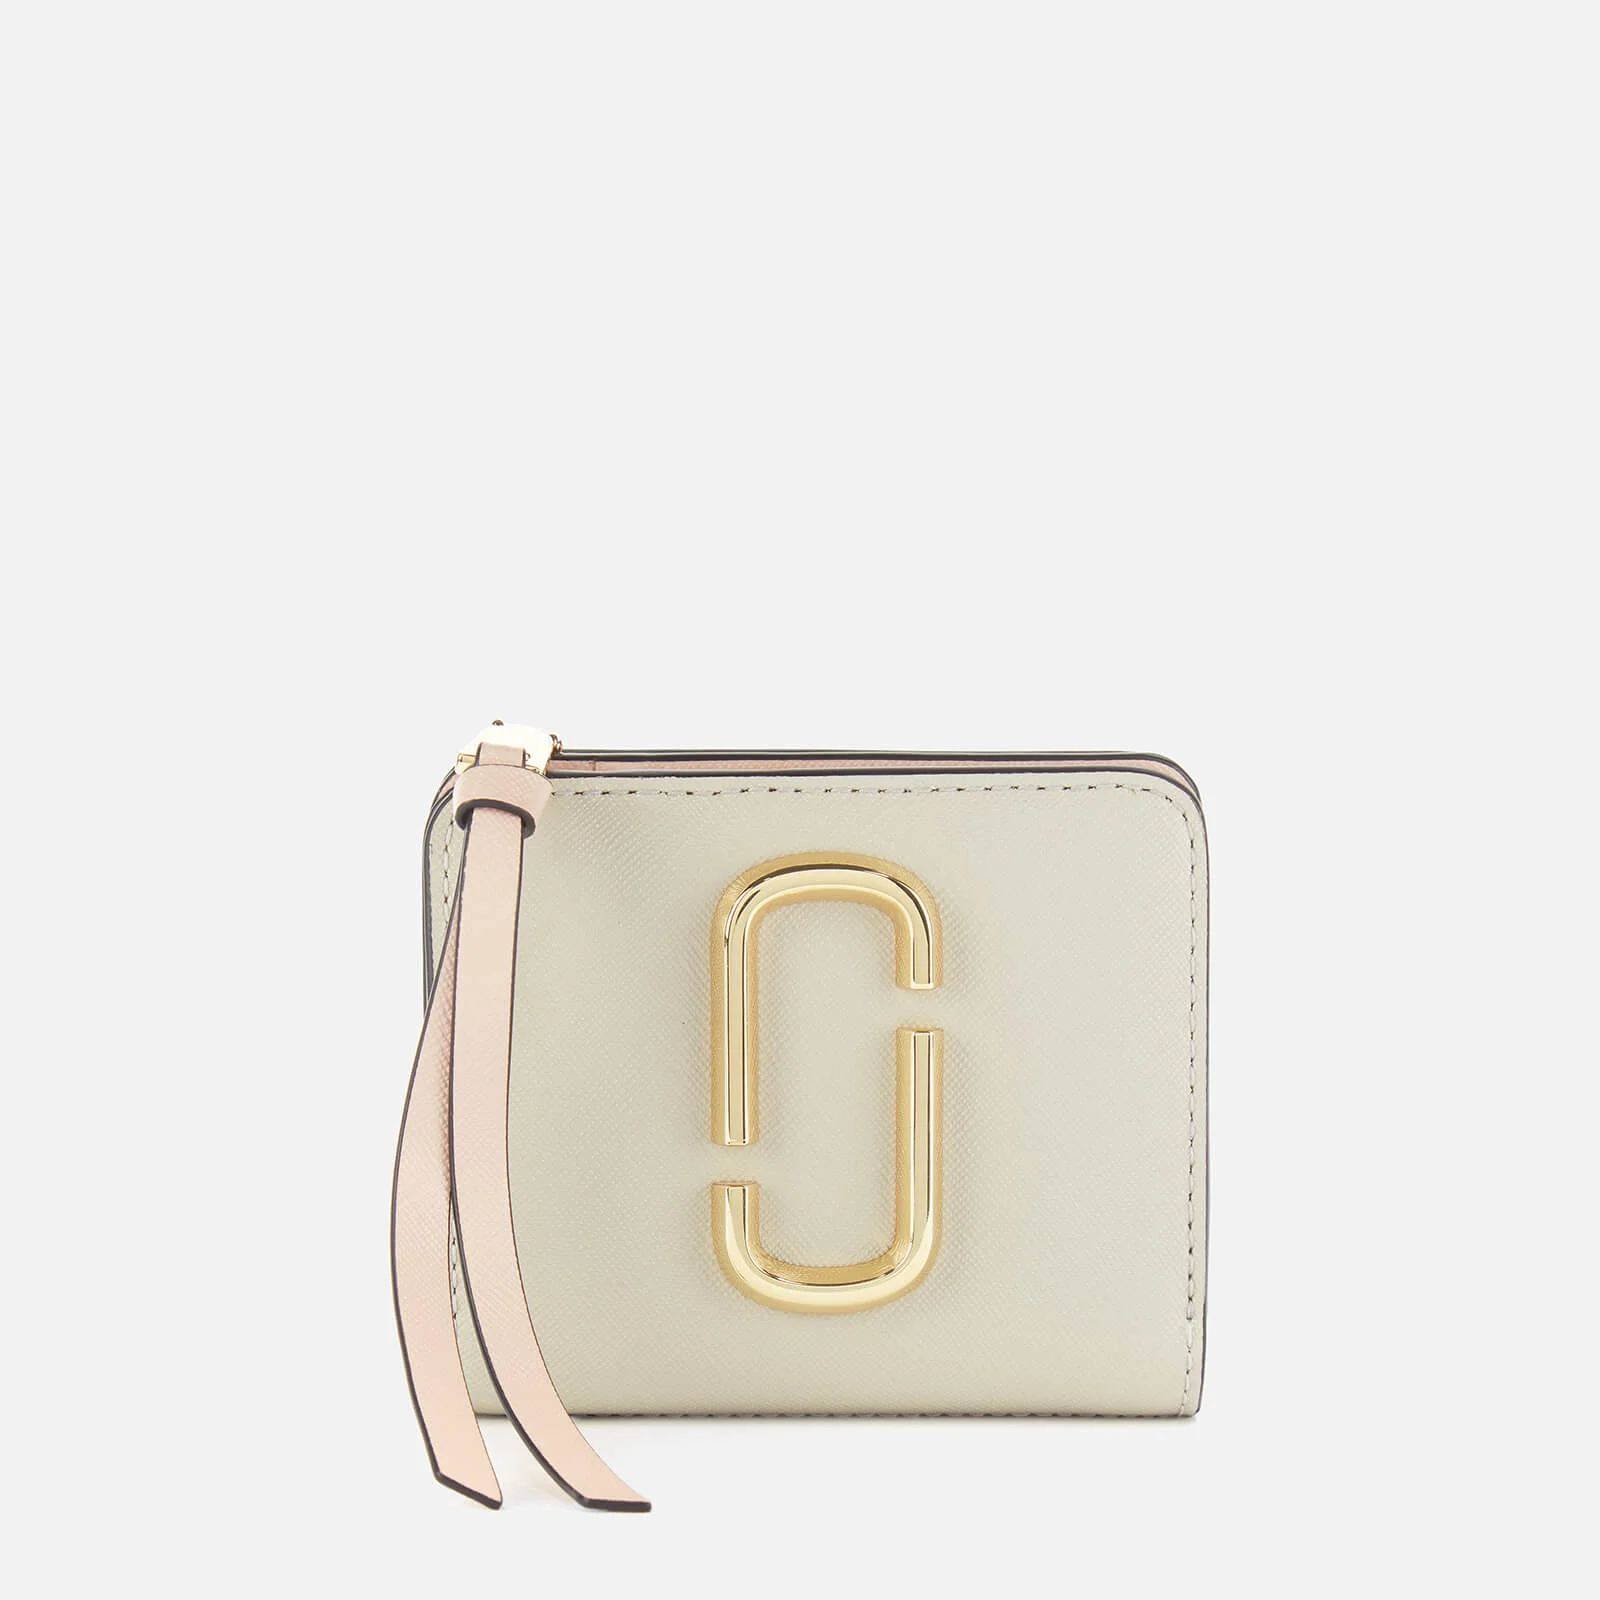 Marc Jacobs Women's Mini Compact Wallet - Dust Multi Image 1